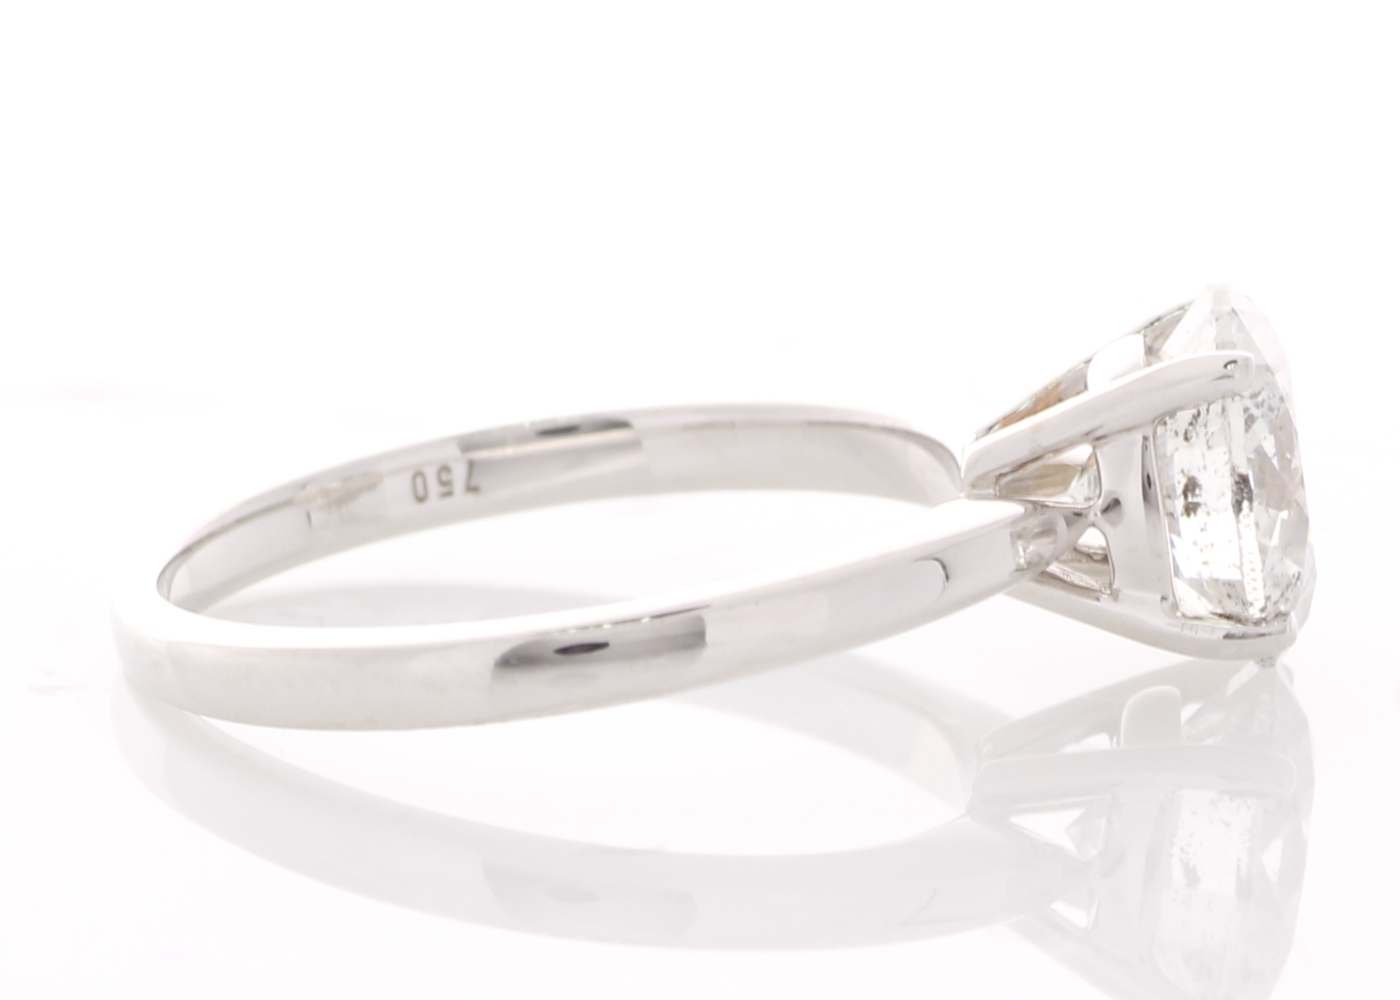 18ct White Gold Prong Set Diamond Ring 2.01 Carats - Image 4 of 5